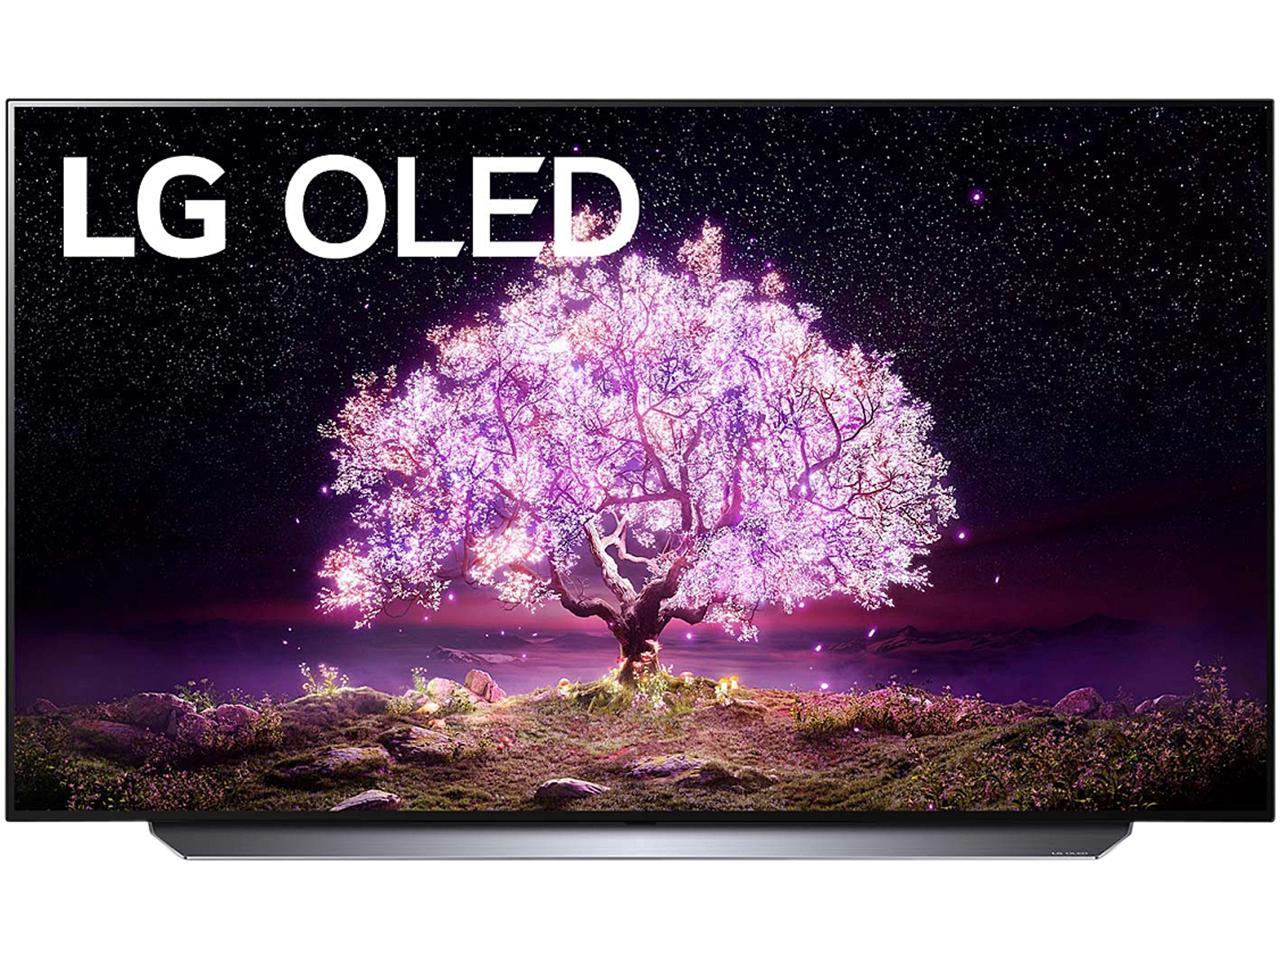 55" LG OLED55C1PUB 4K Smart OLED TV + $75 Visa GC + 4-Yr Warranty + $100 Fanatics GC $1197 + Free Shipping